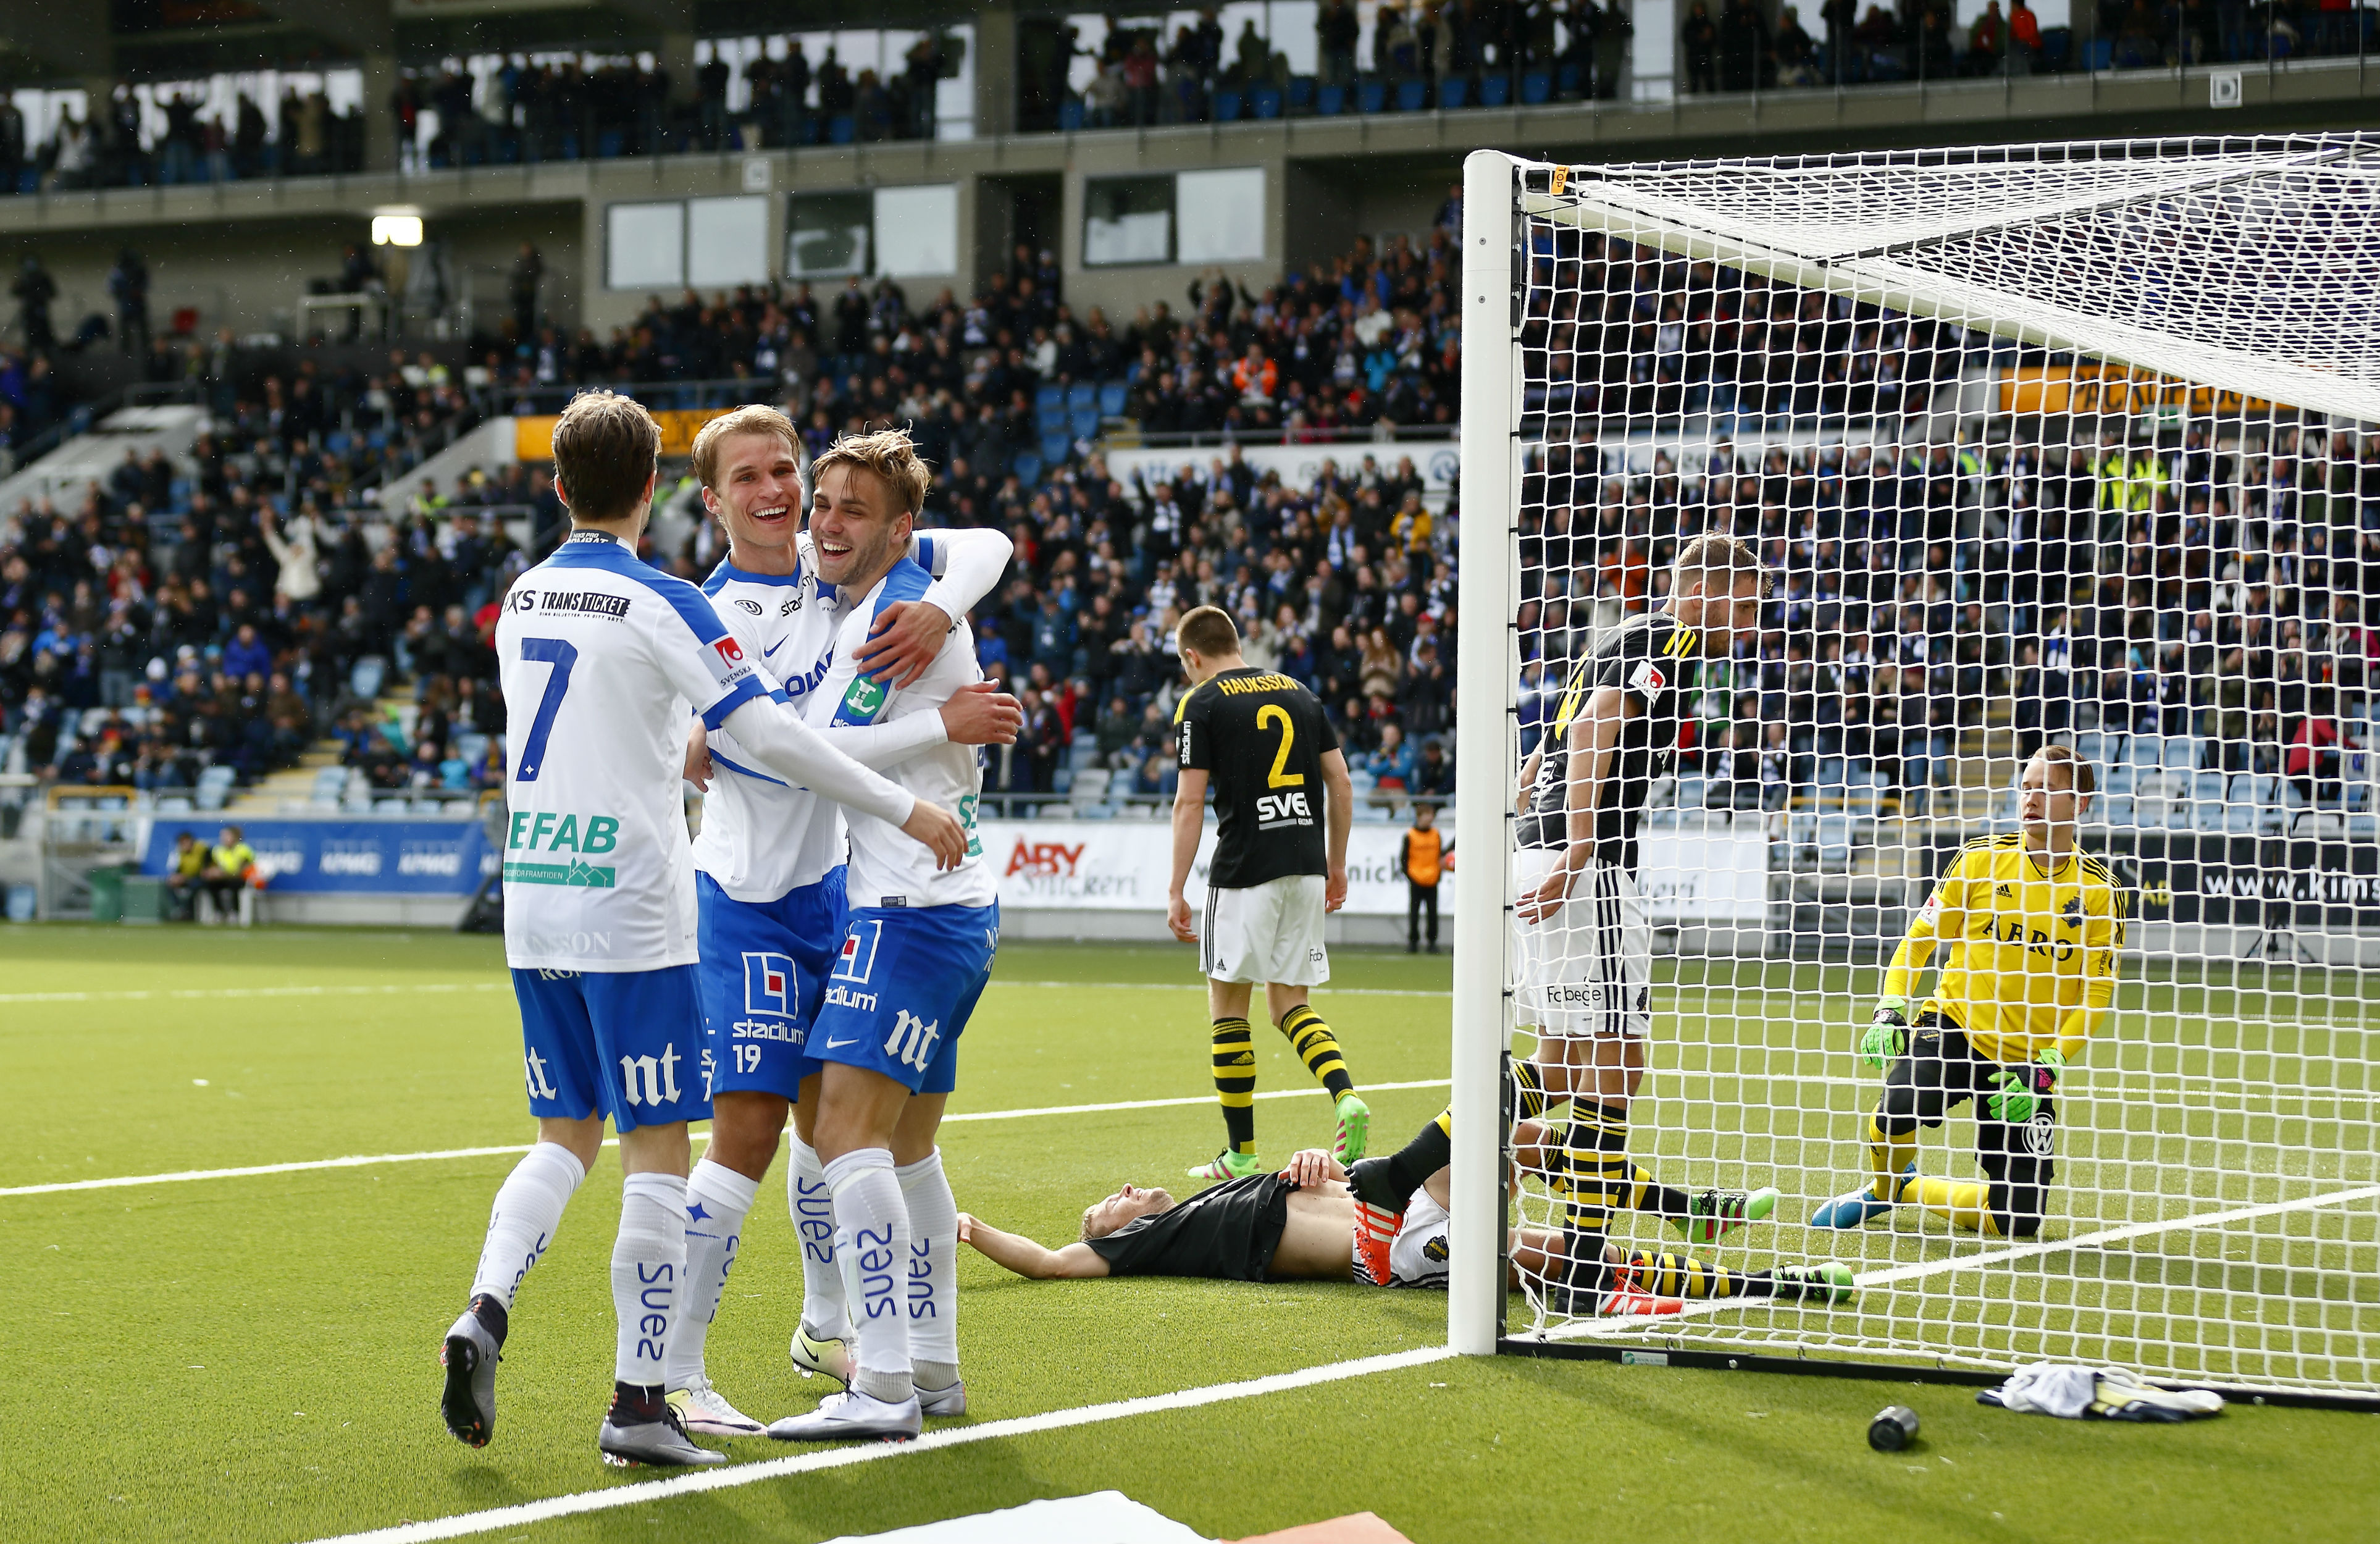 Norrkoping VS Kalmar  BETTING TIPS (16-05-2017)